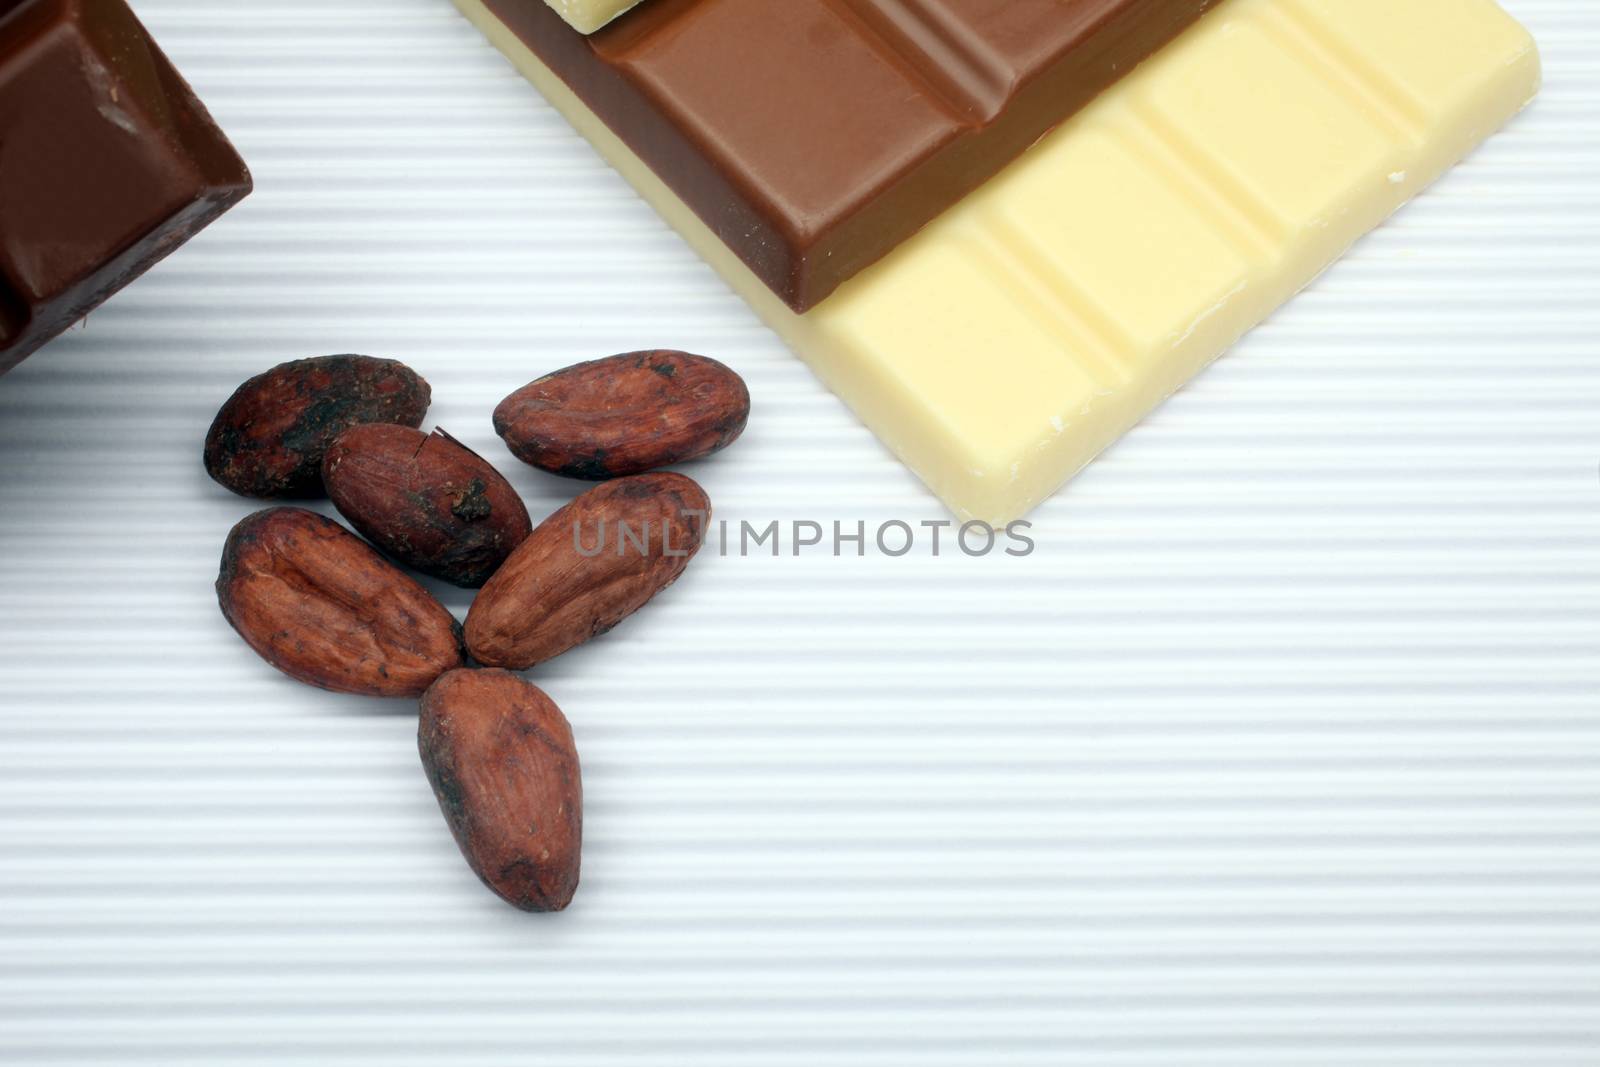 Chocolate by atlas